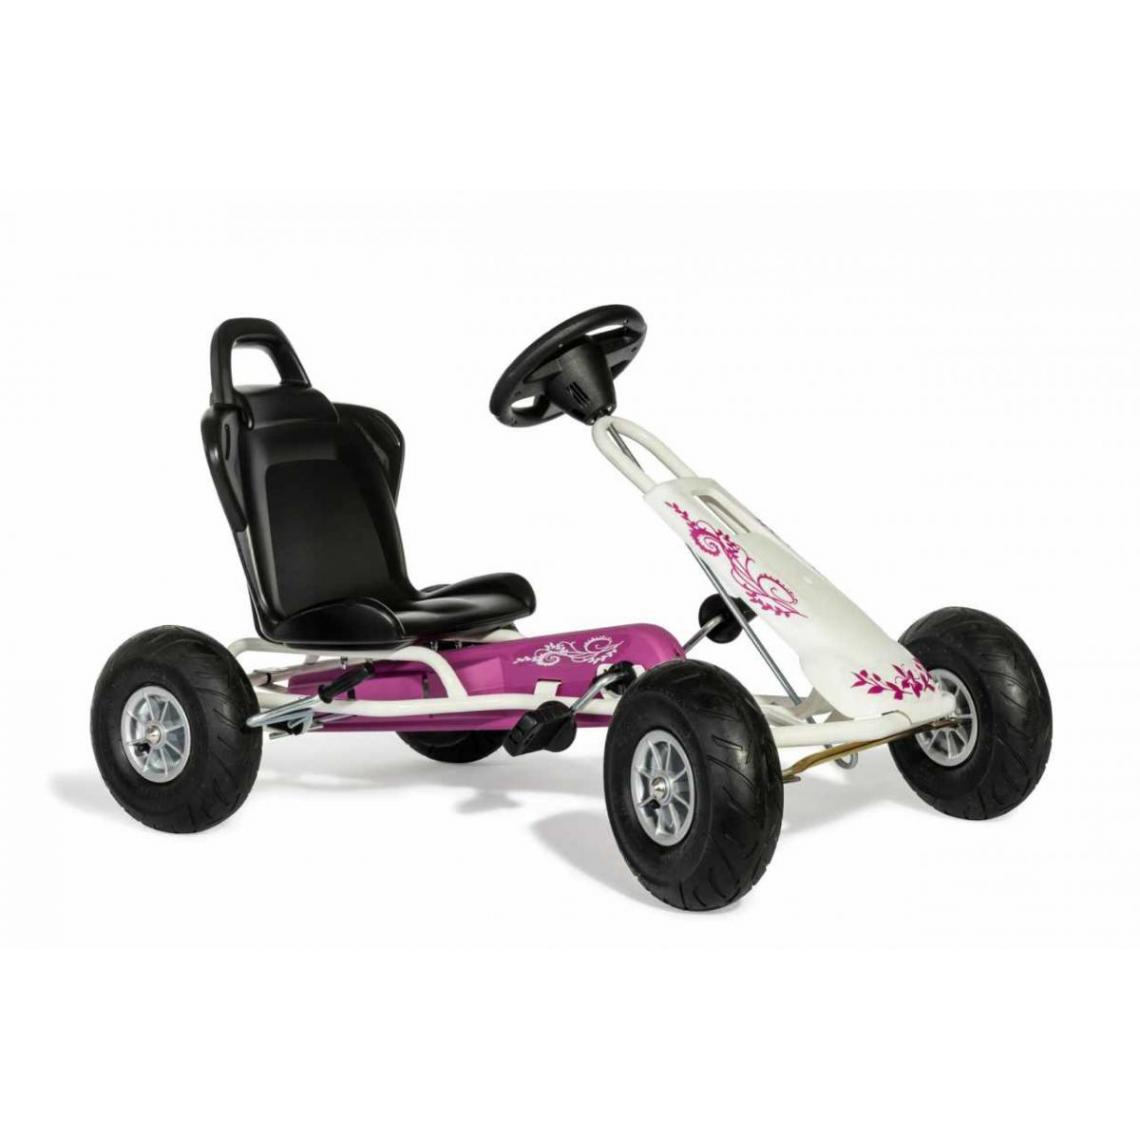 Rolly Toys - Kart à pédales rose FerbedoGoKart Air Runner - Véhicule à pédales